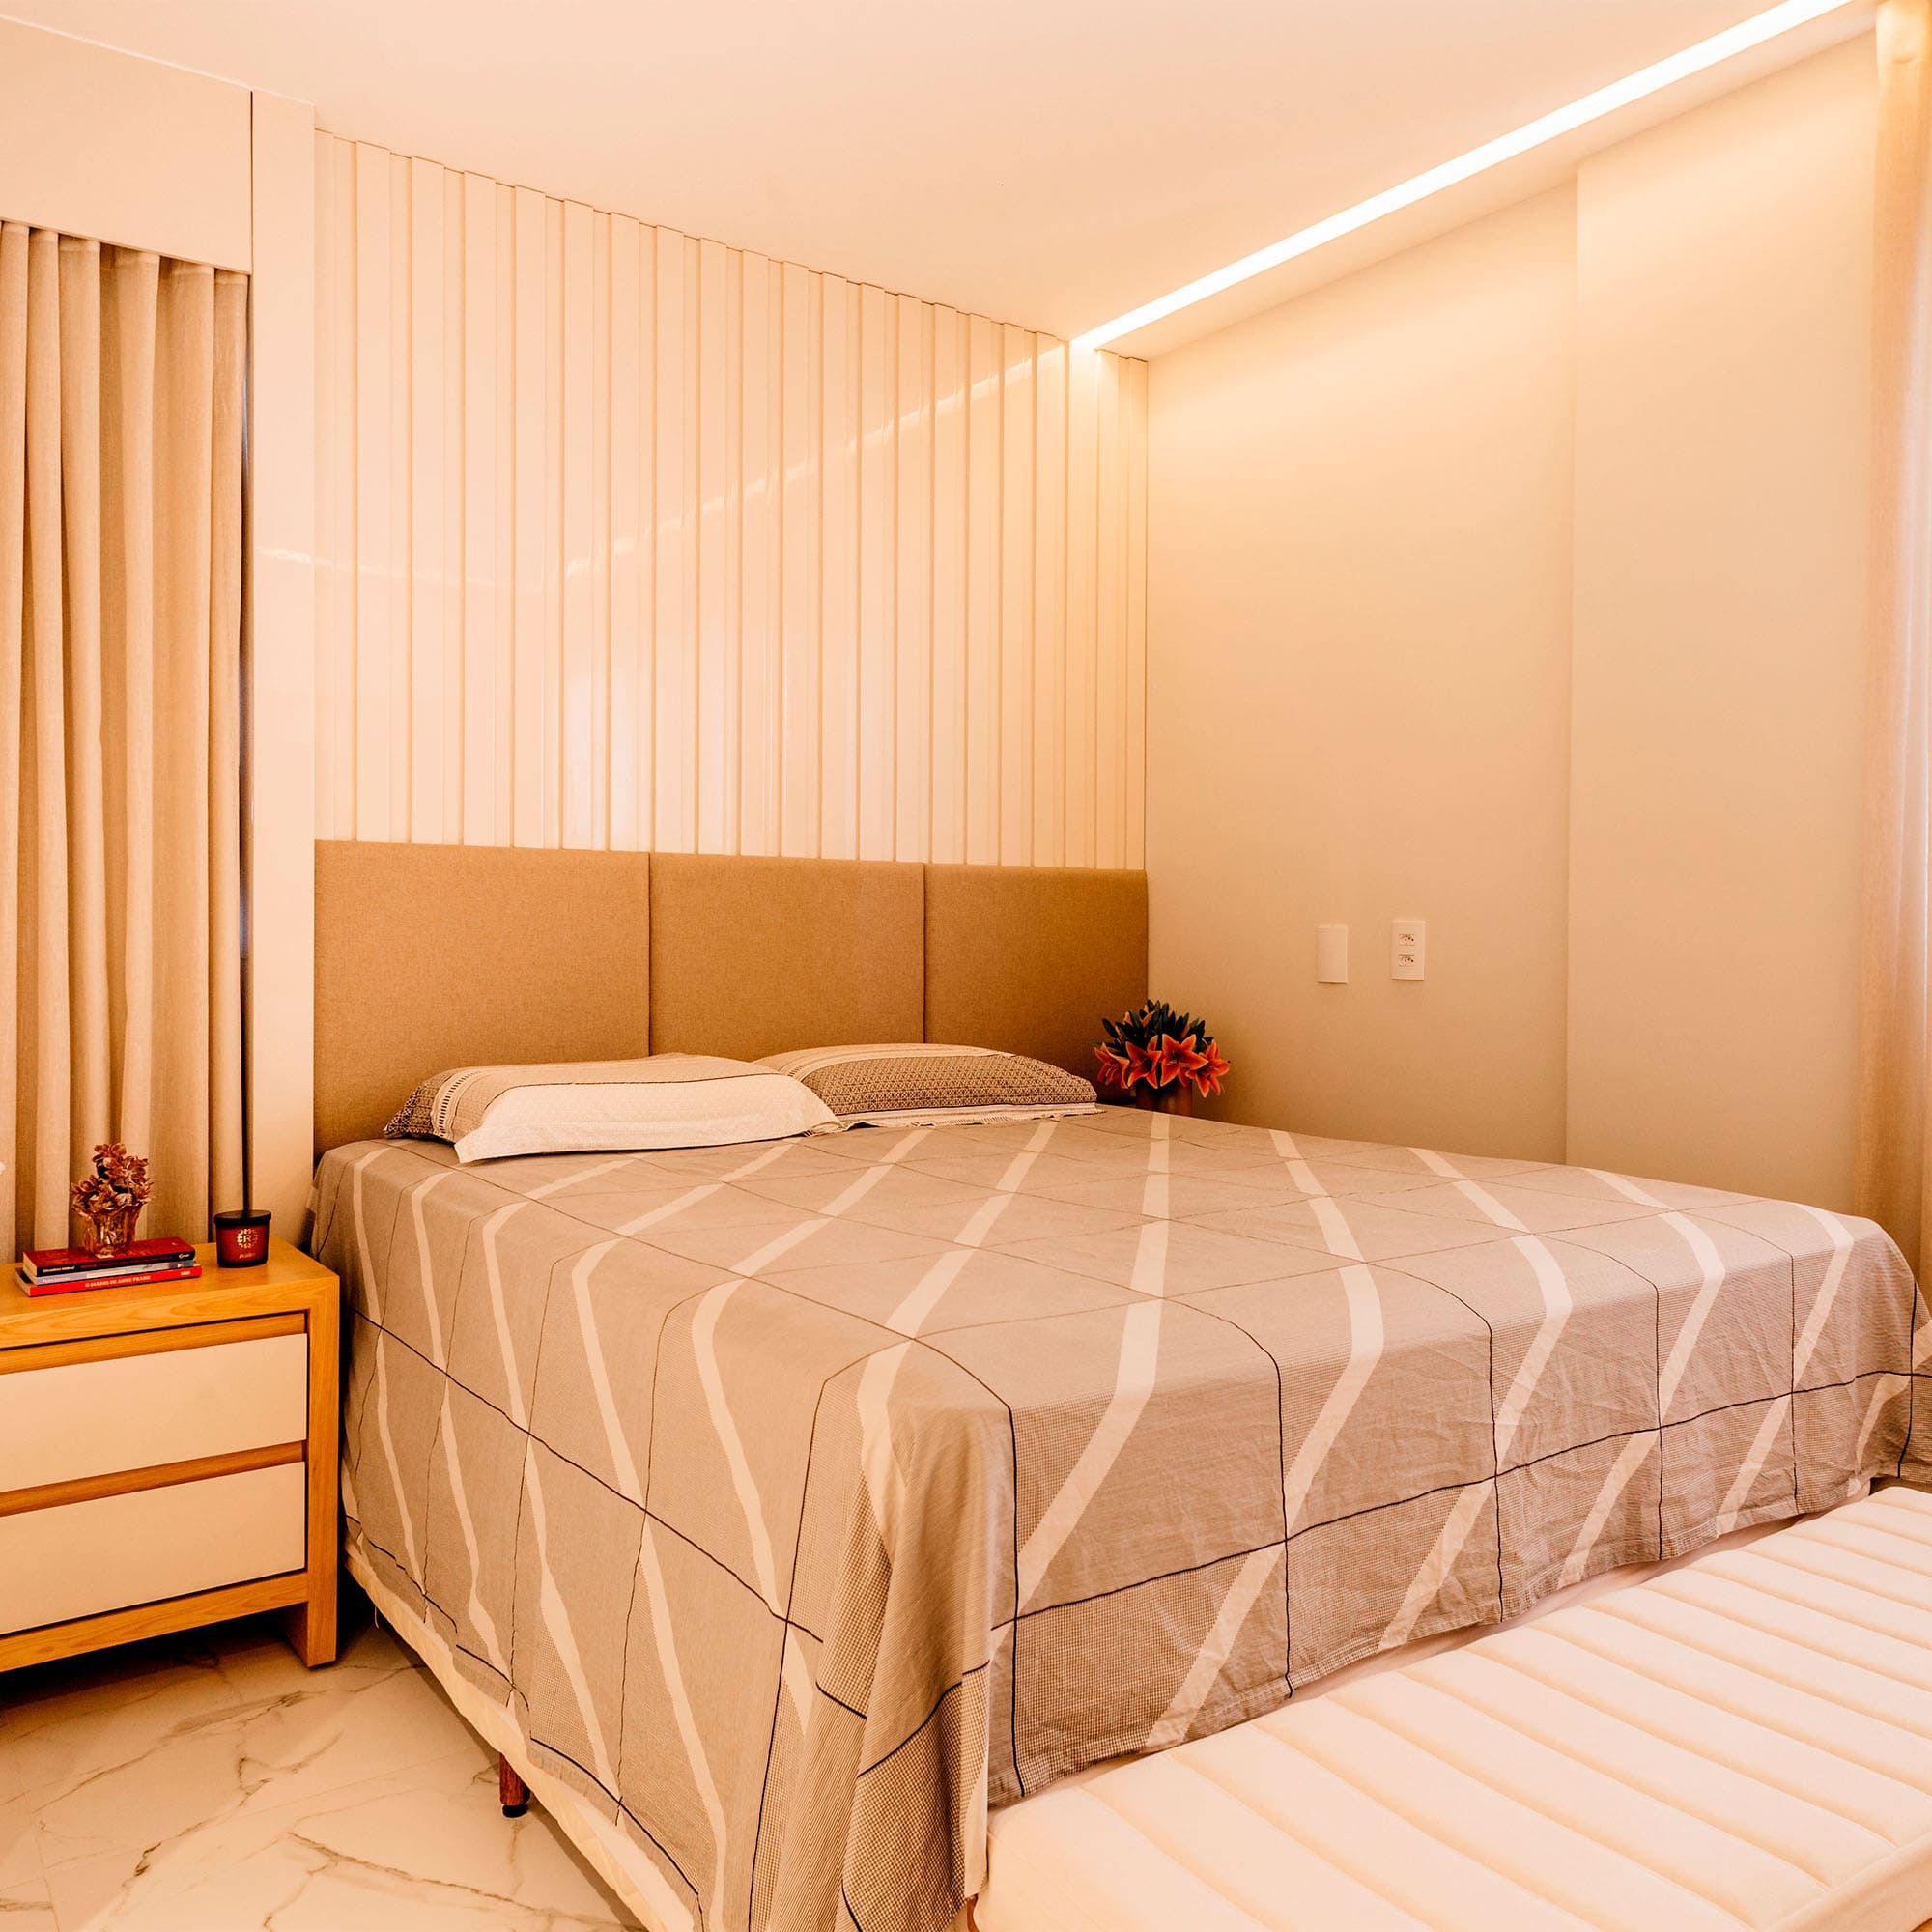 interior-design-bedroom-with-modern-decoration